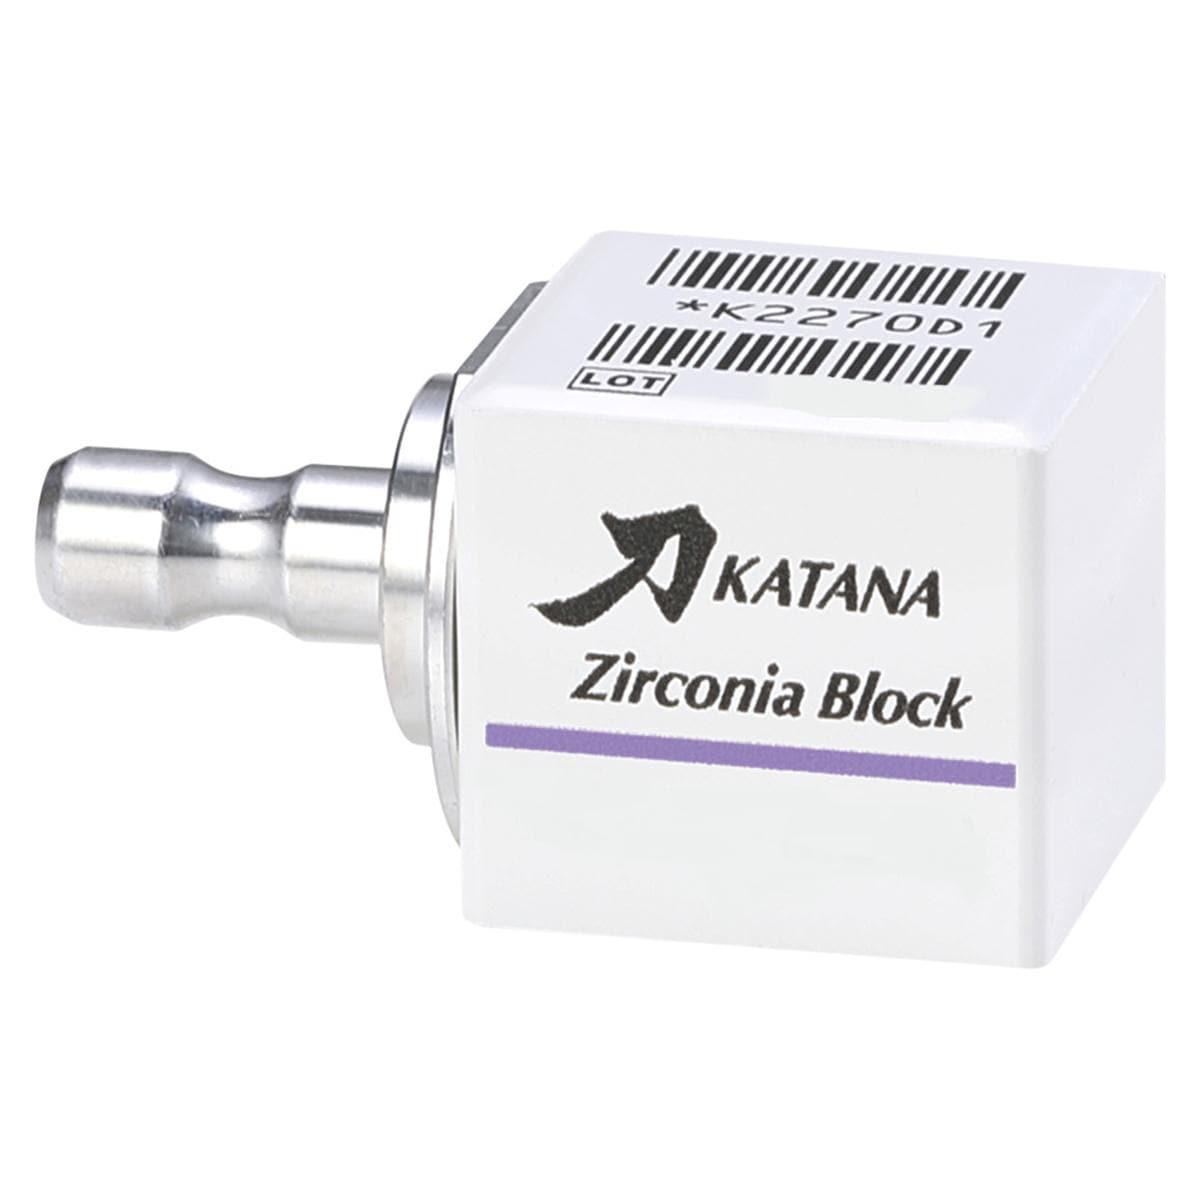 KATANA™ ZIRCONIA BLOCK STML - Basic Set - Set